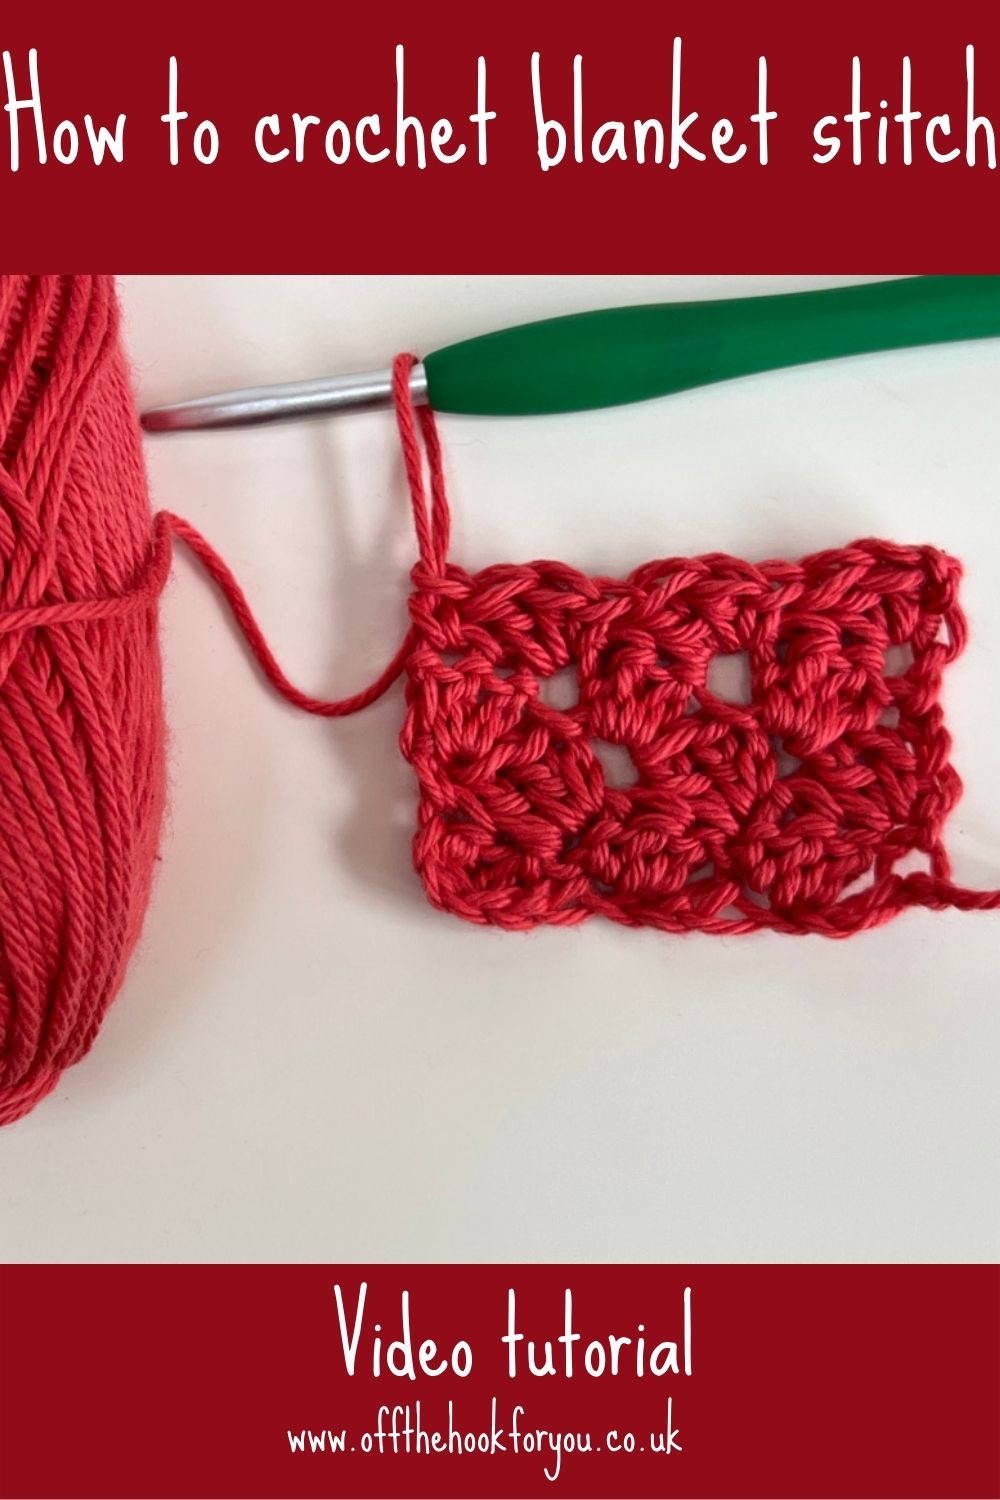 How to crochet blanket stitch